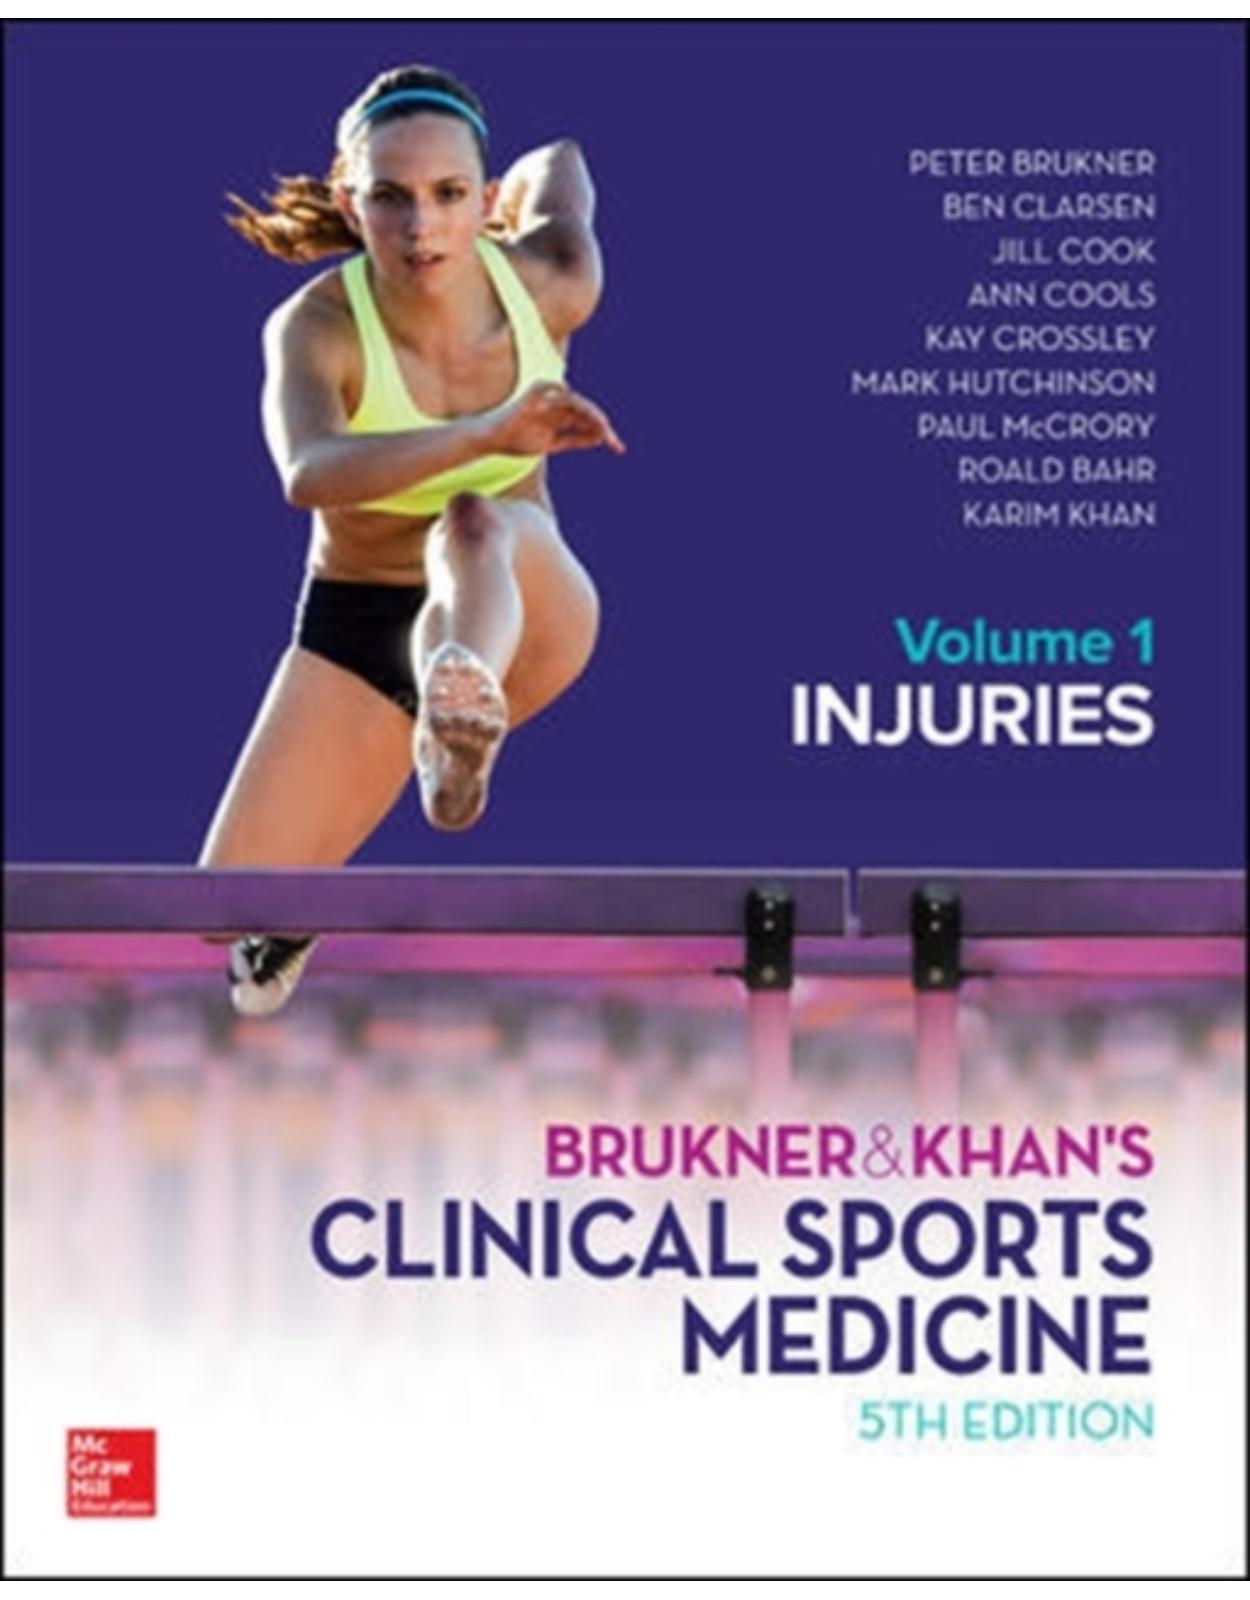 Brukner & Khans Clinical Sports Medicine Injuries Vol. 1